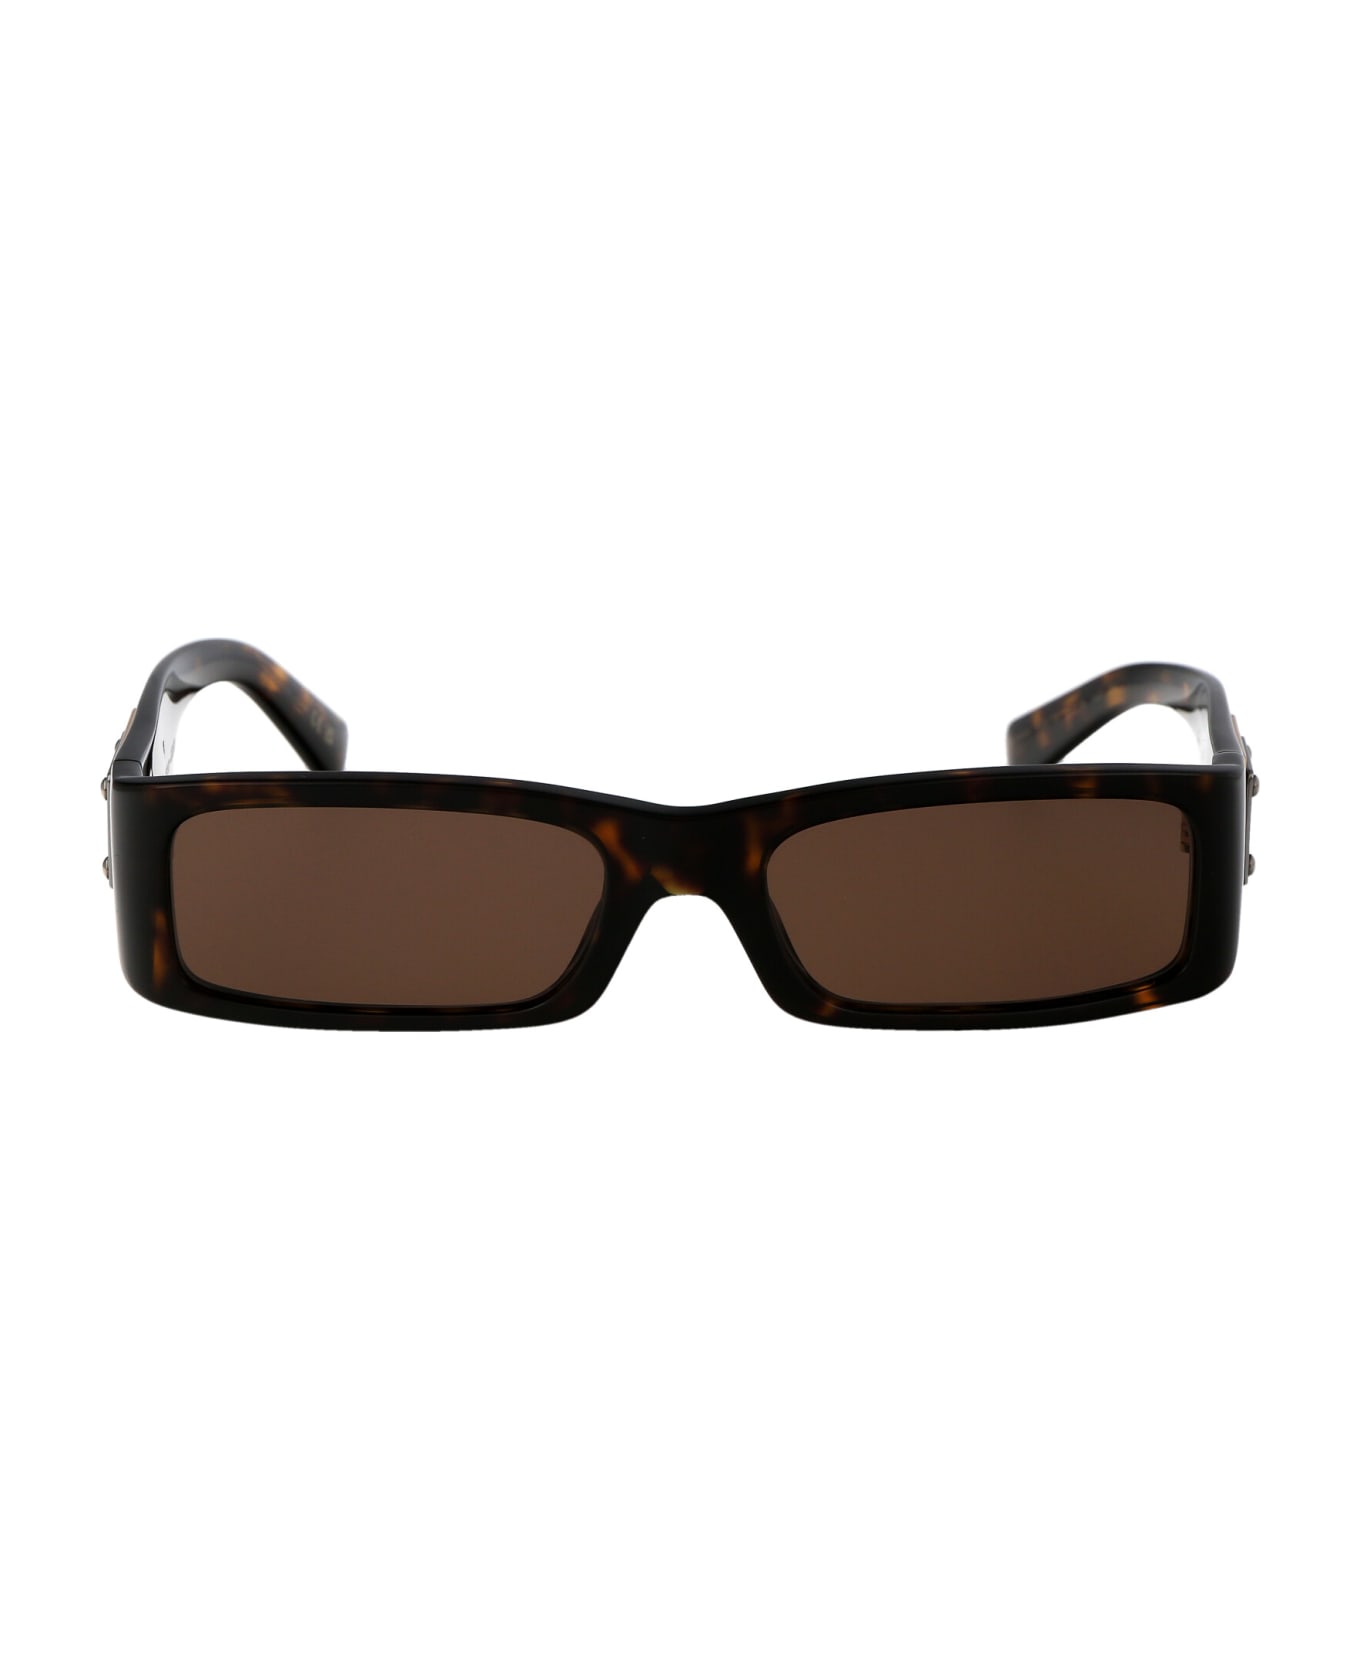 Dolce & Gabbana Eyewear 0dg4444 Sunglasses - 502/73 HAVANA サングラス